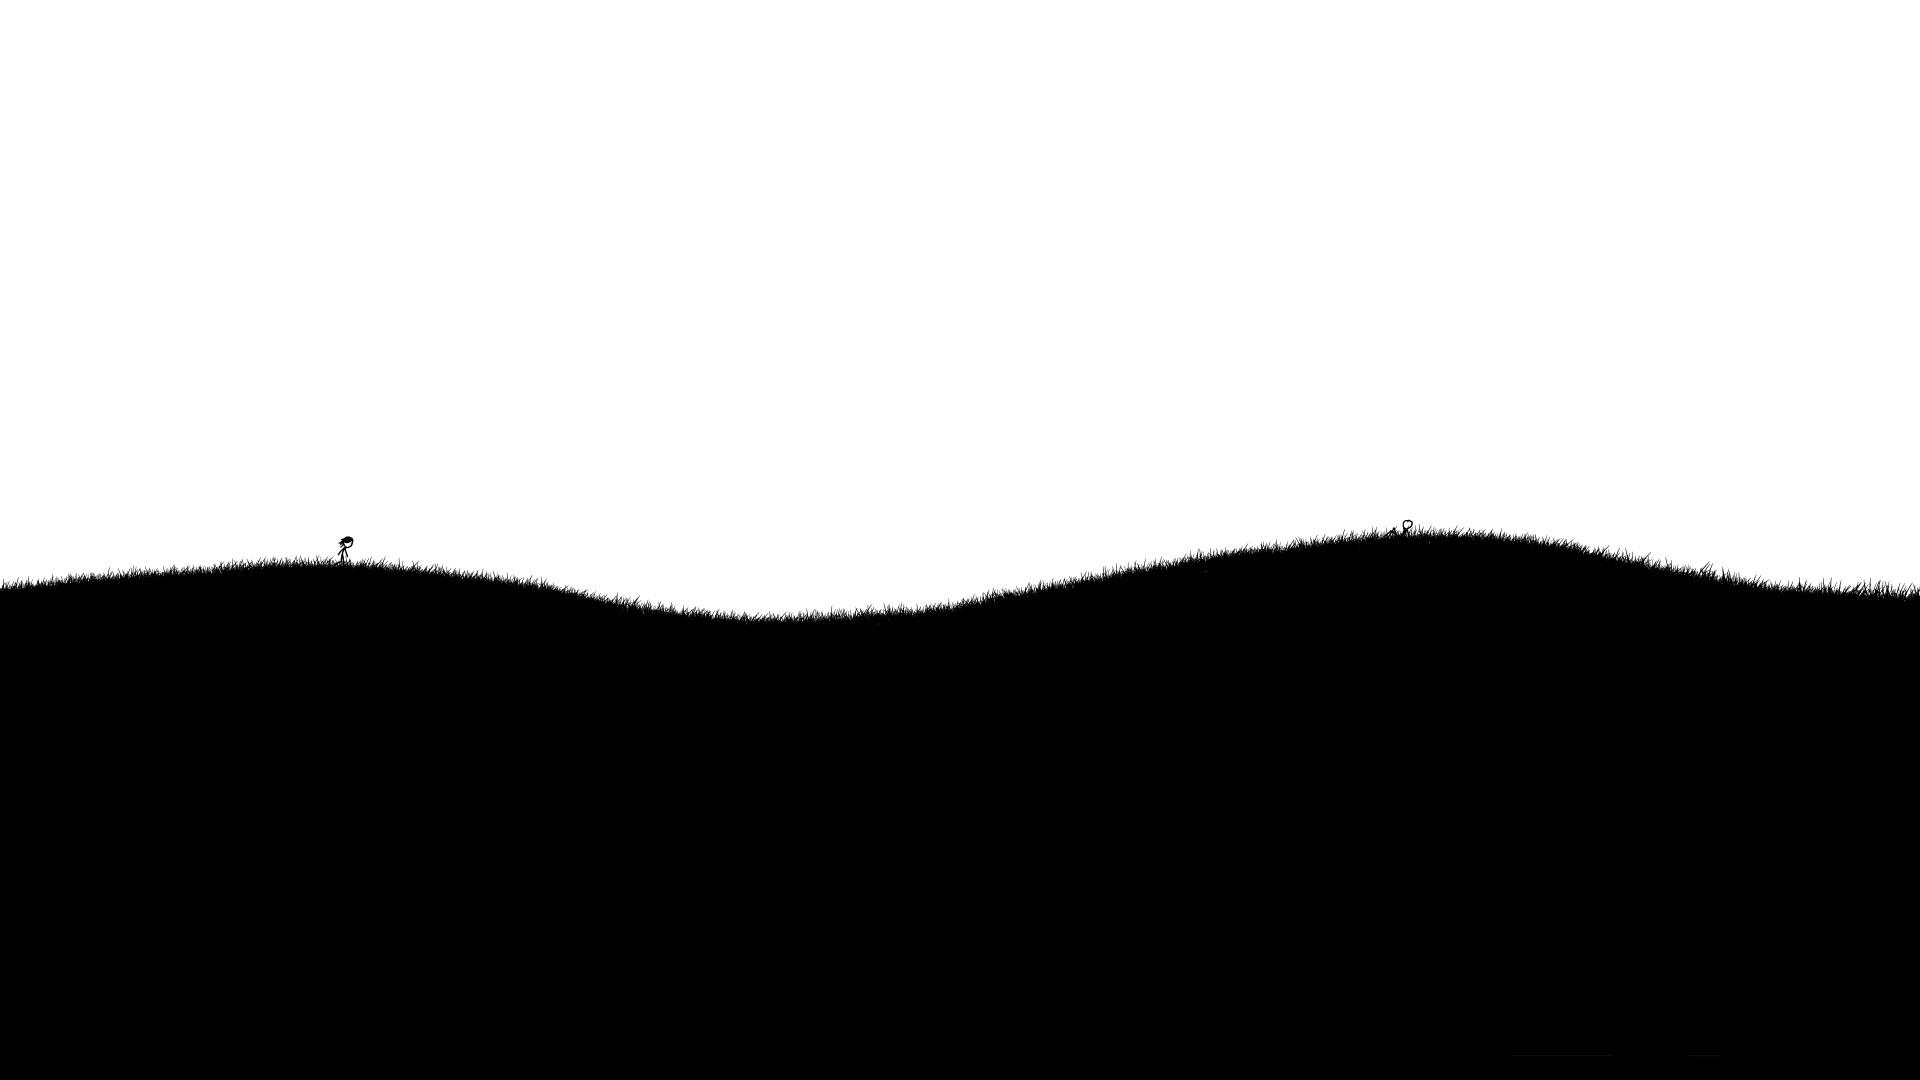  Black  and white  minimalistic  xkcd wallpaper  108382 